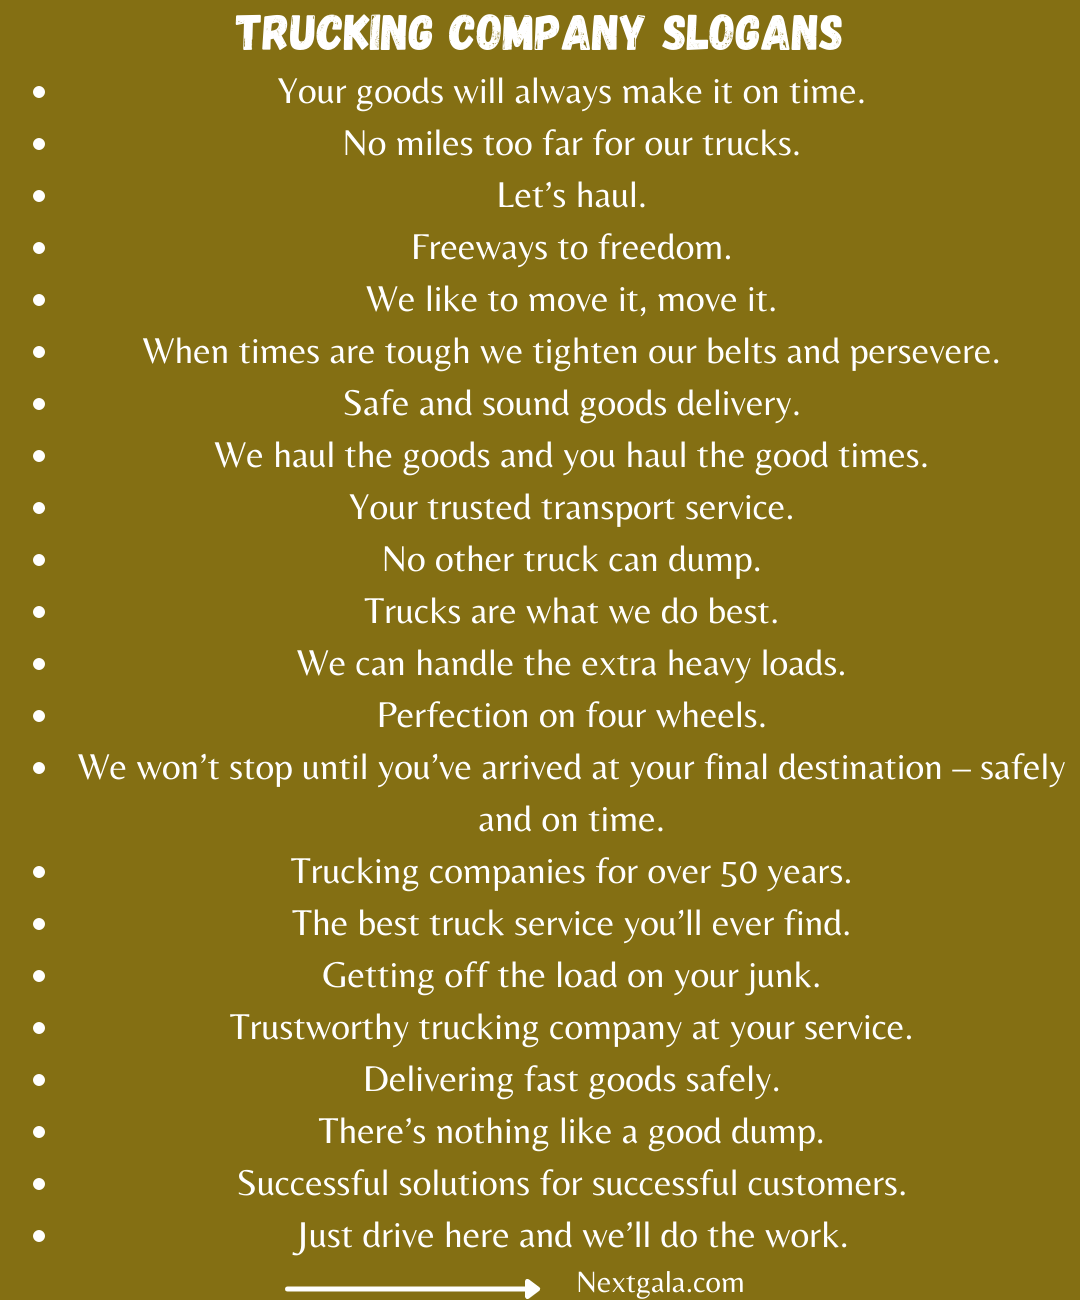 Trucking Company Slogans